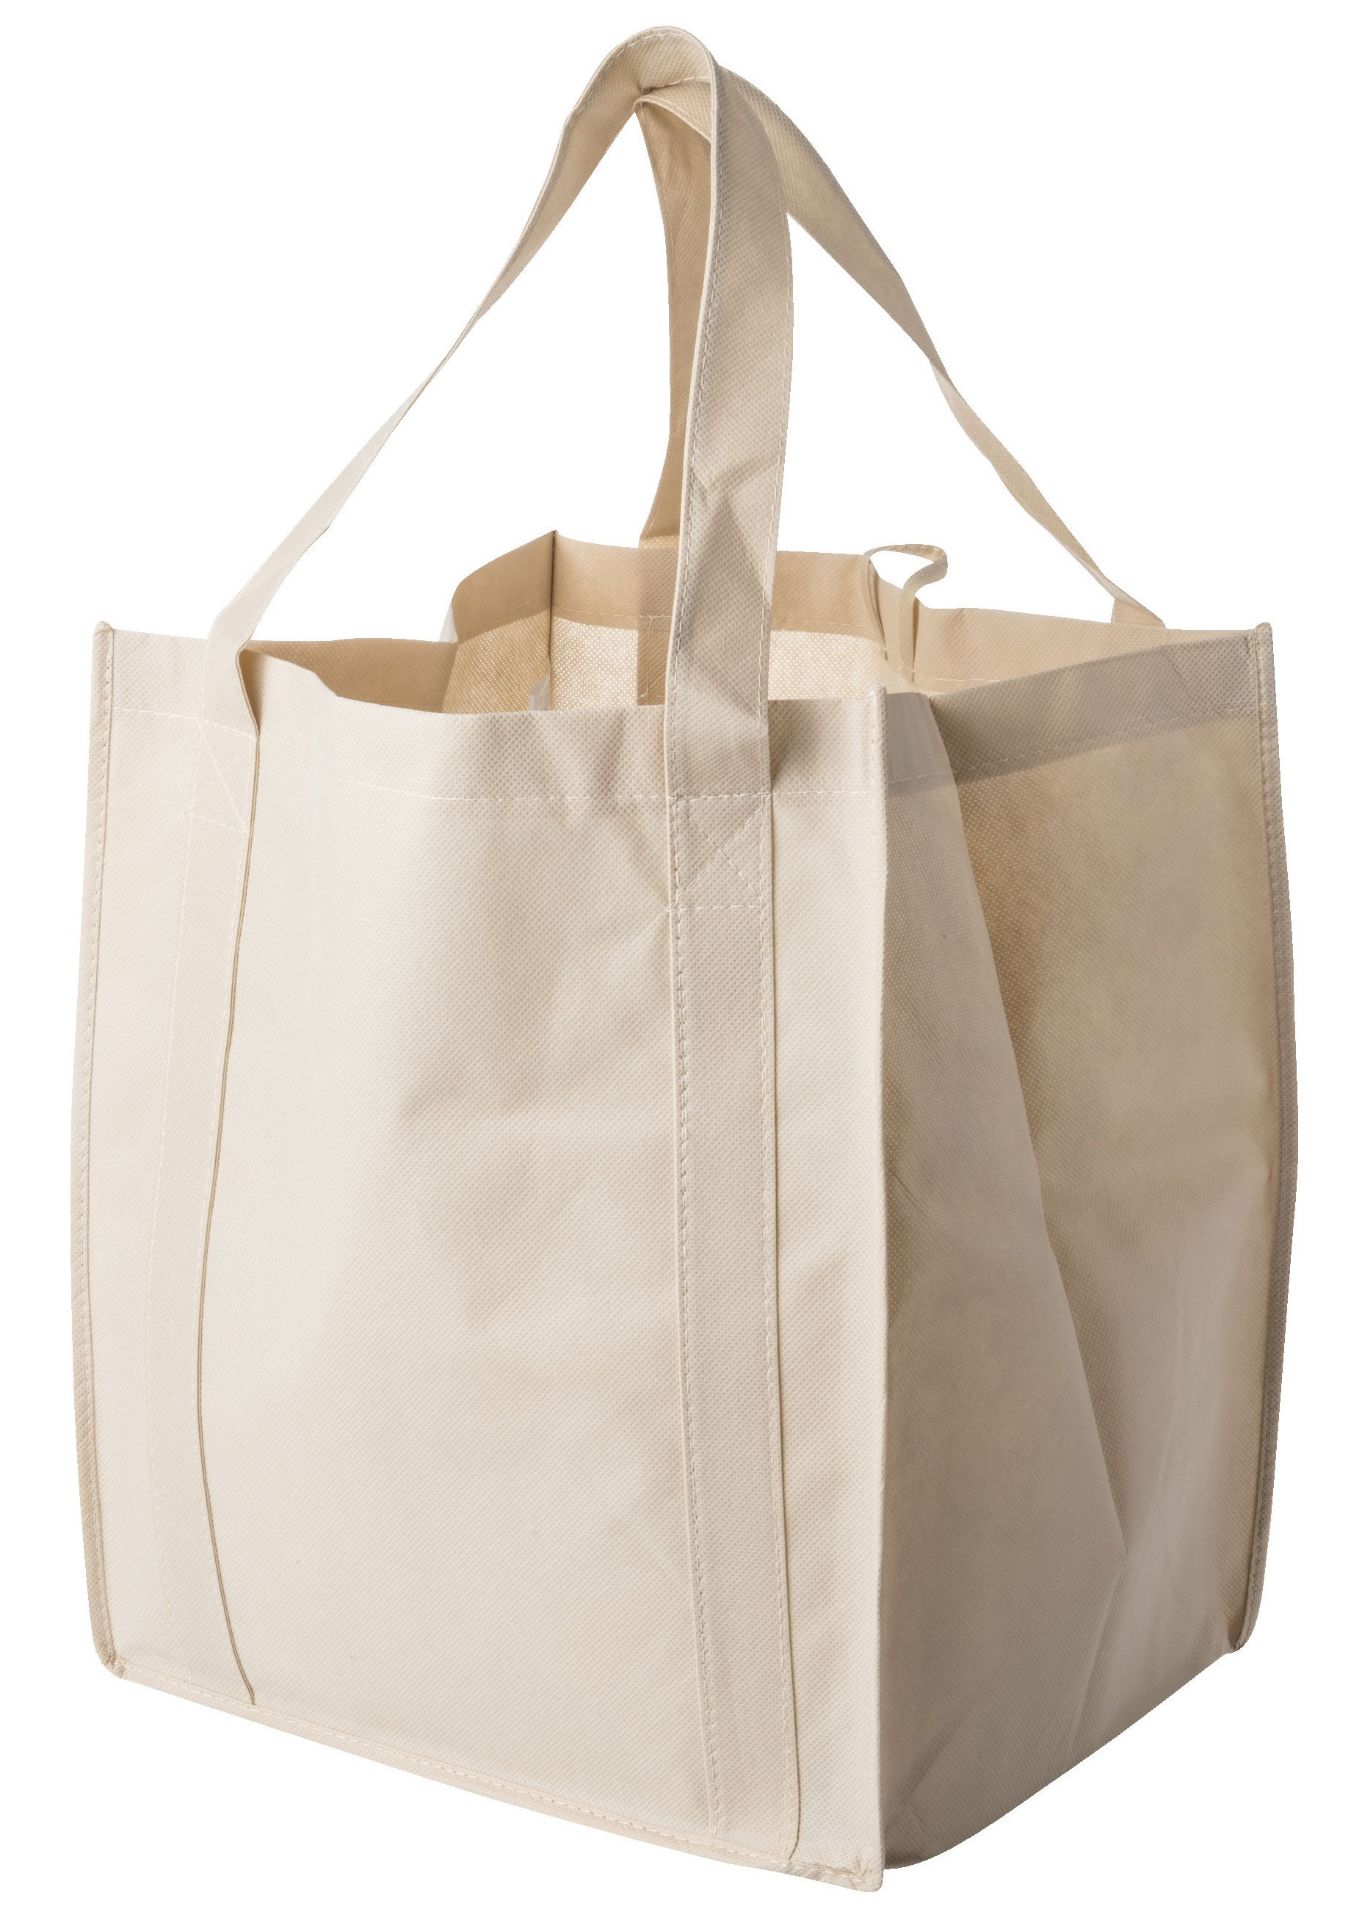 200 x Reuseable Shopper XL Bags - Colour Natural - Brand New Resale Stock - Size 255mm x 380mm x